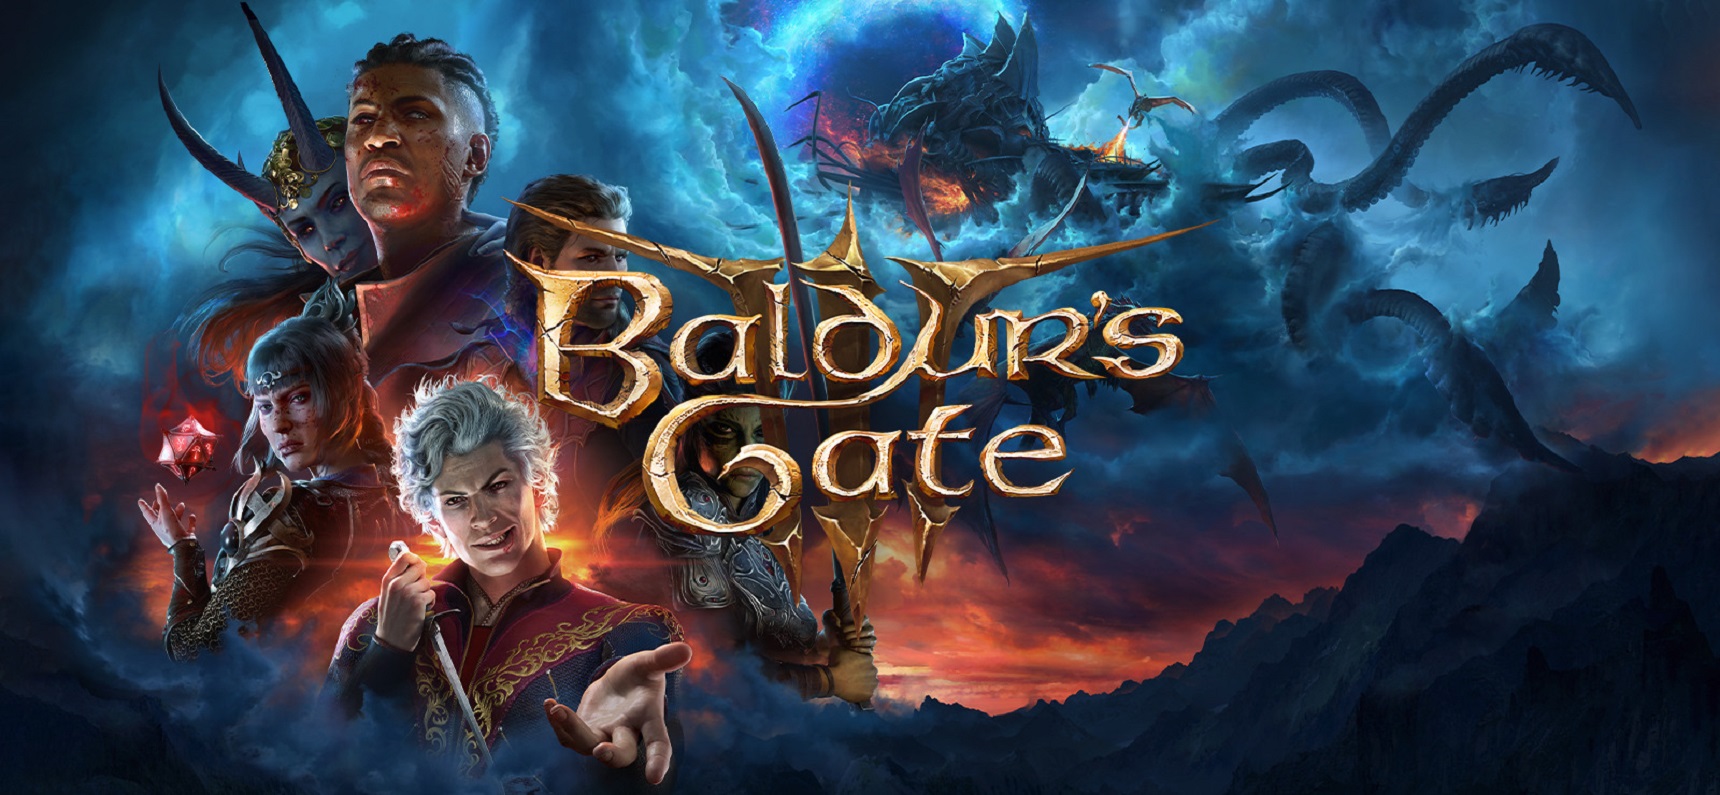 Download Baldurs Gate 3 Deluxe Edition Games PC